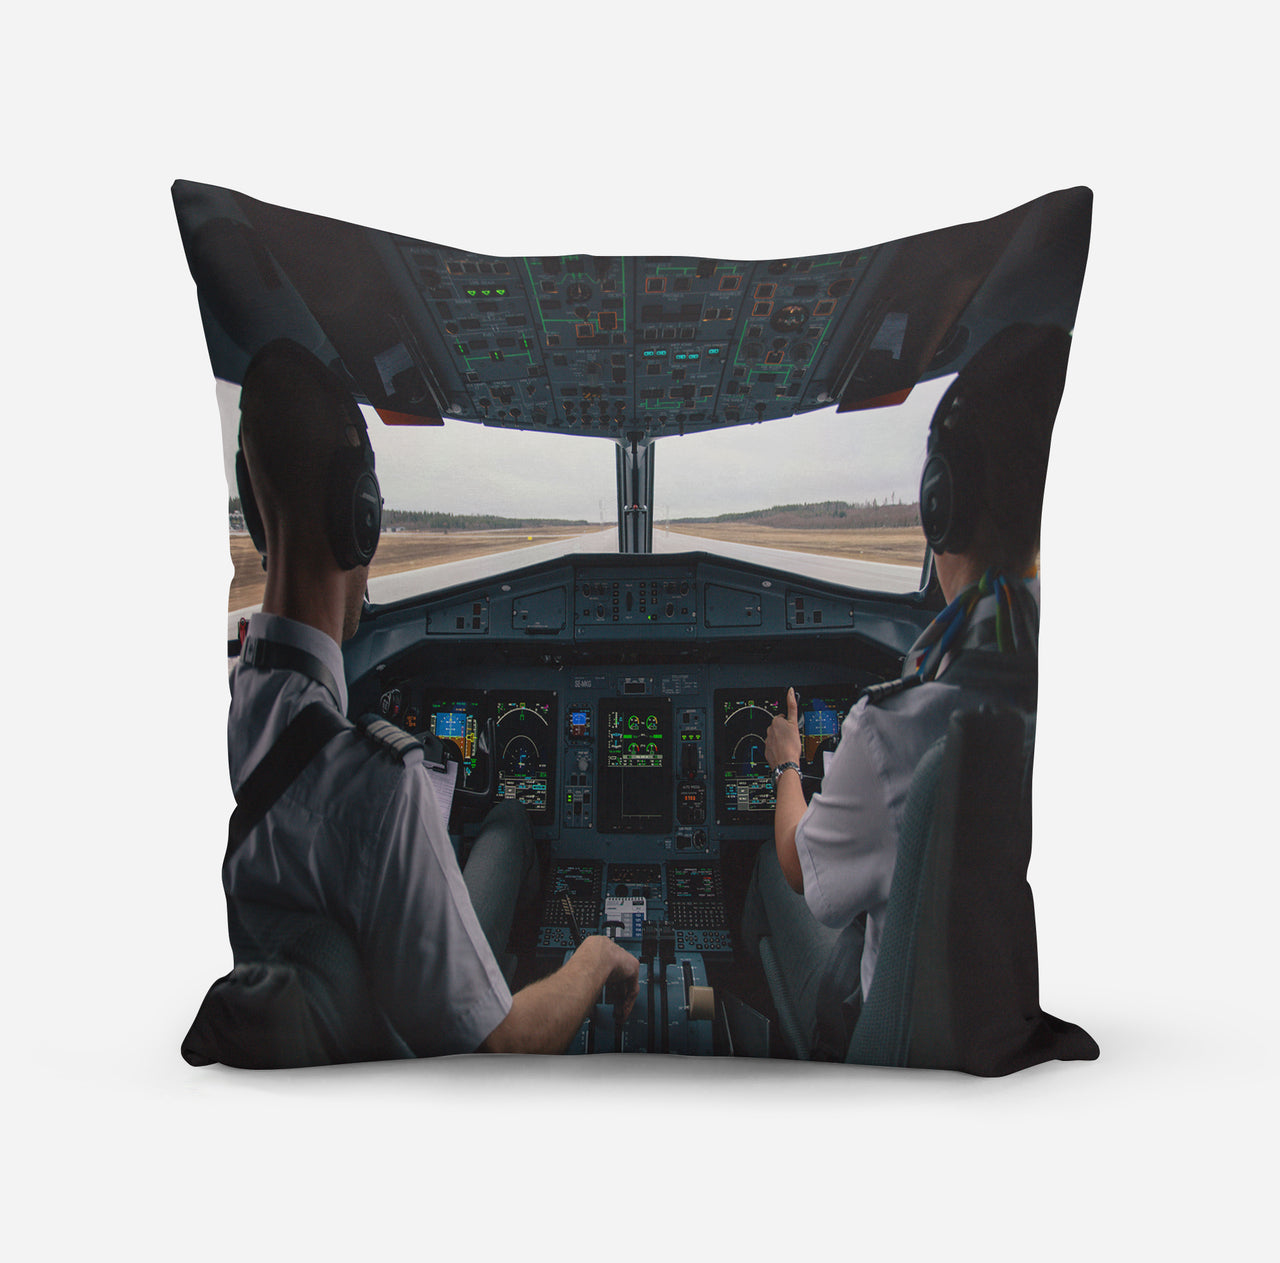 Departing Aircraft's Cockpit Designed Pillows